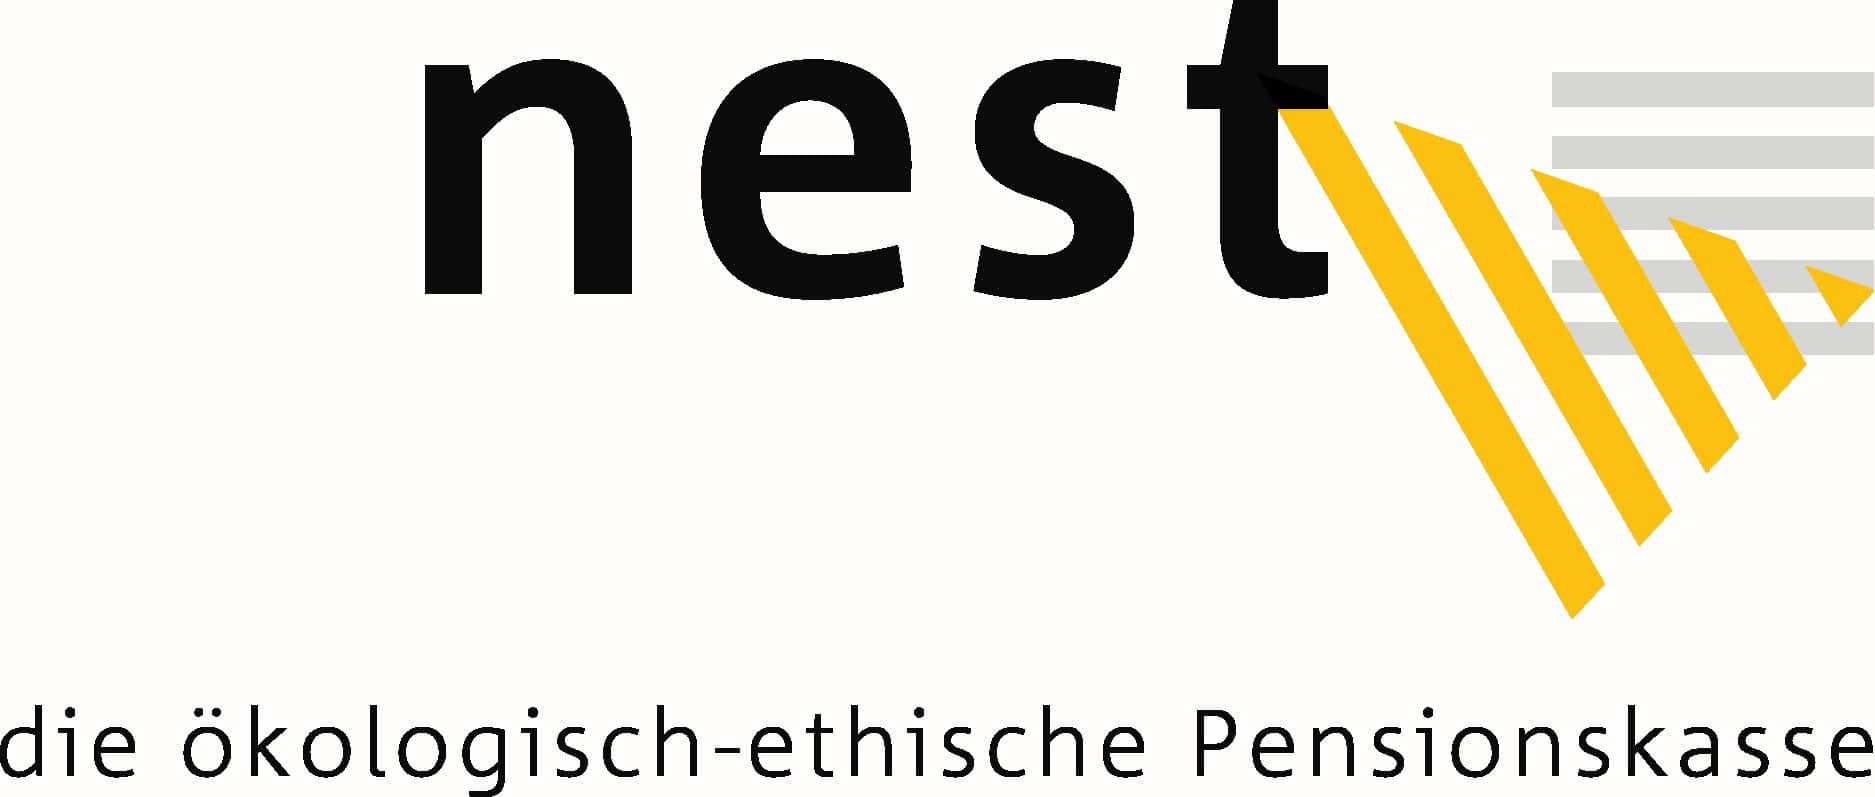 Nest Sammelstiftung Logo Kommunikationstraining